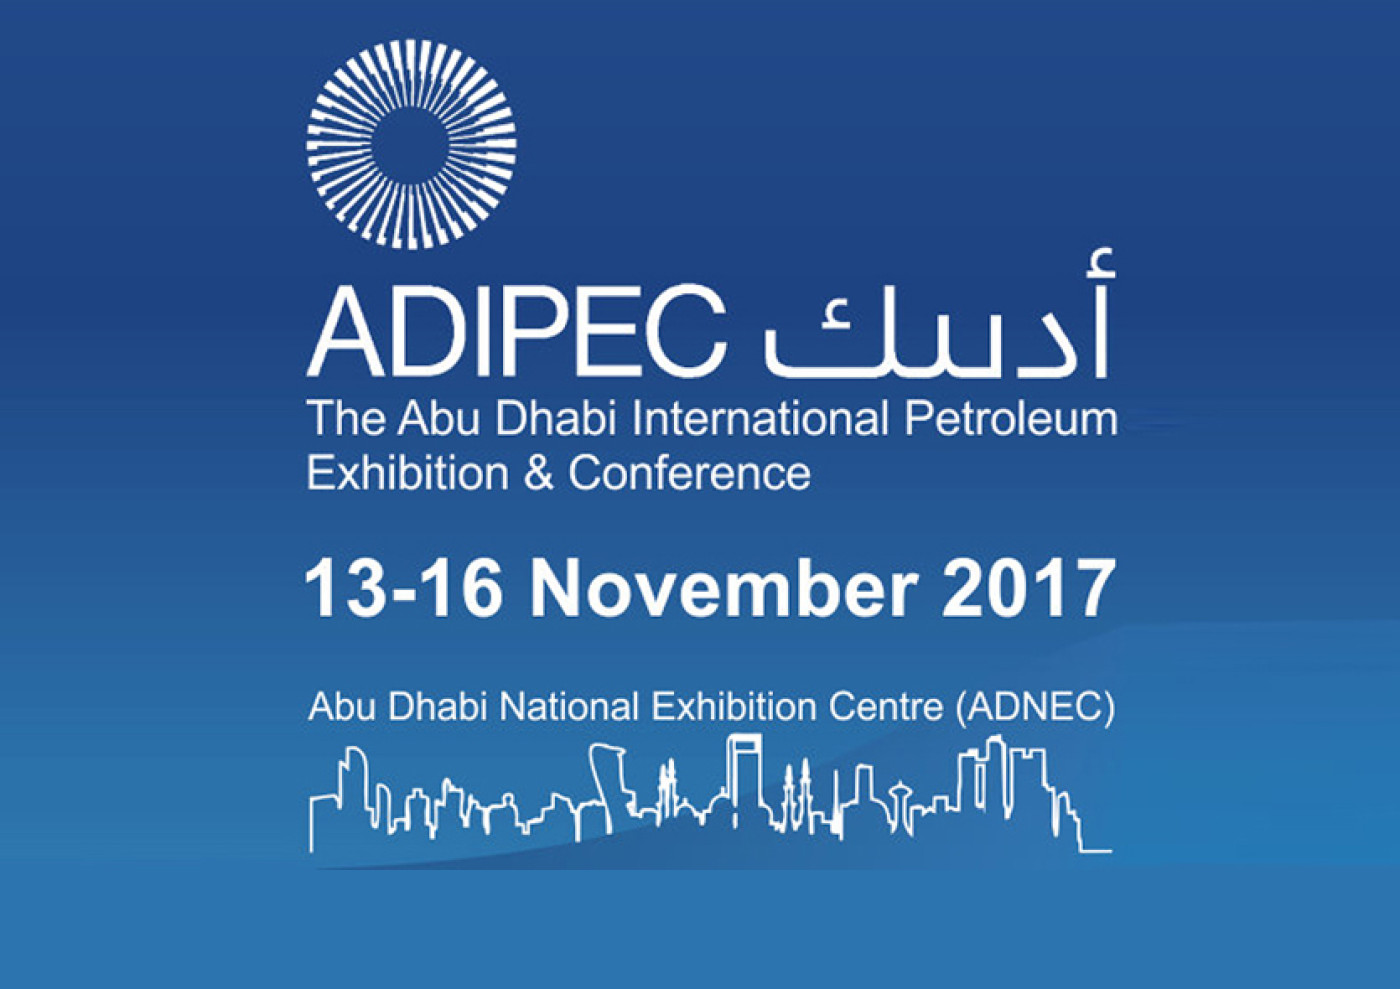 Techfem among the exhibitors at ADIPEC 2017